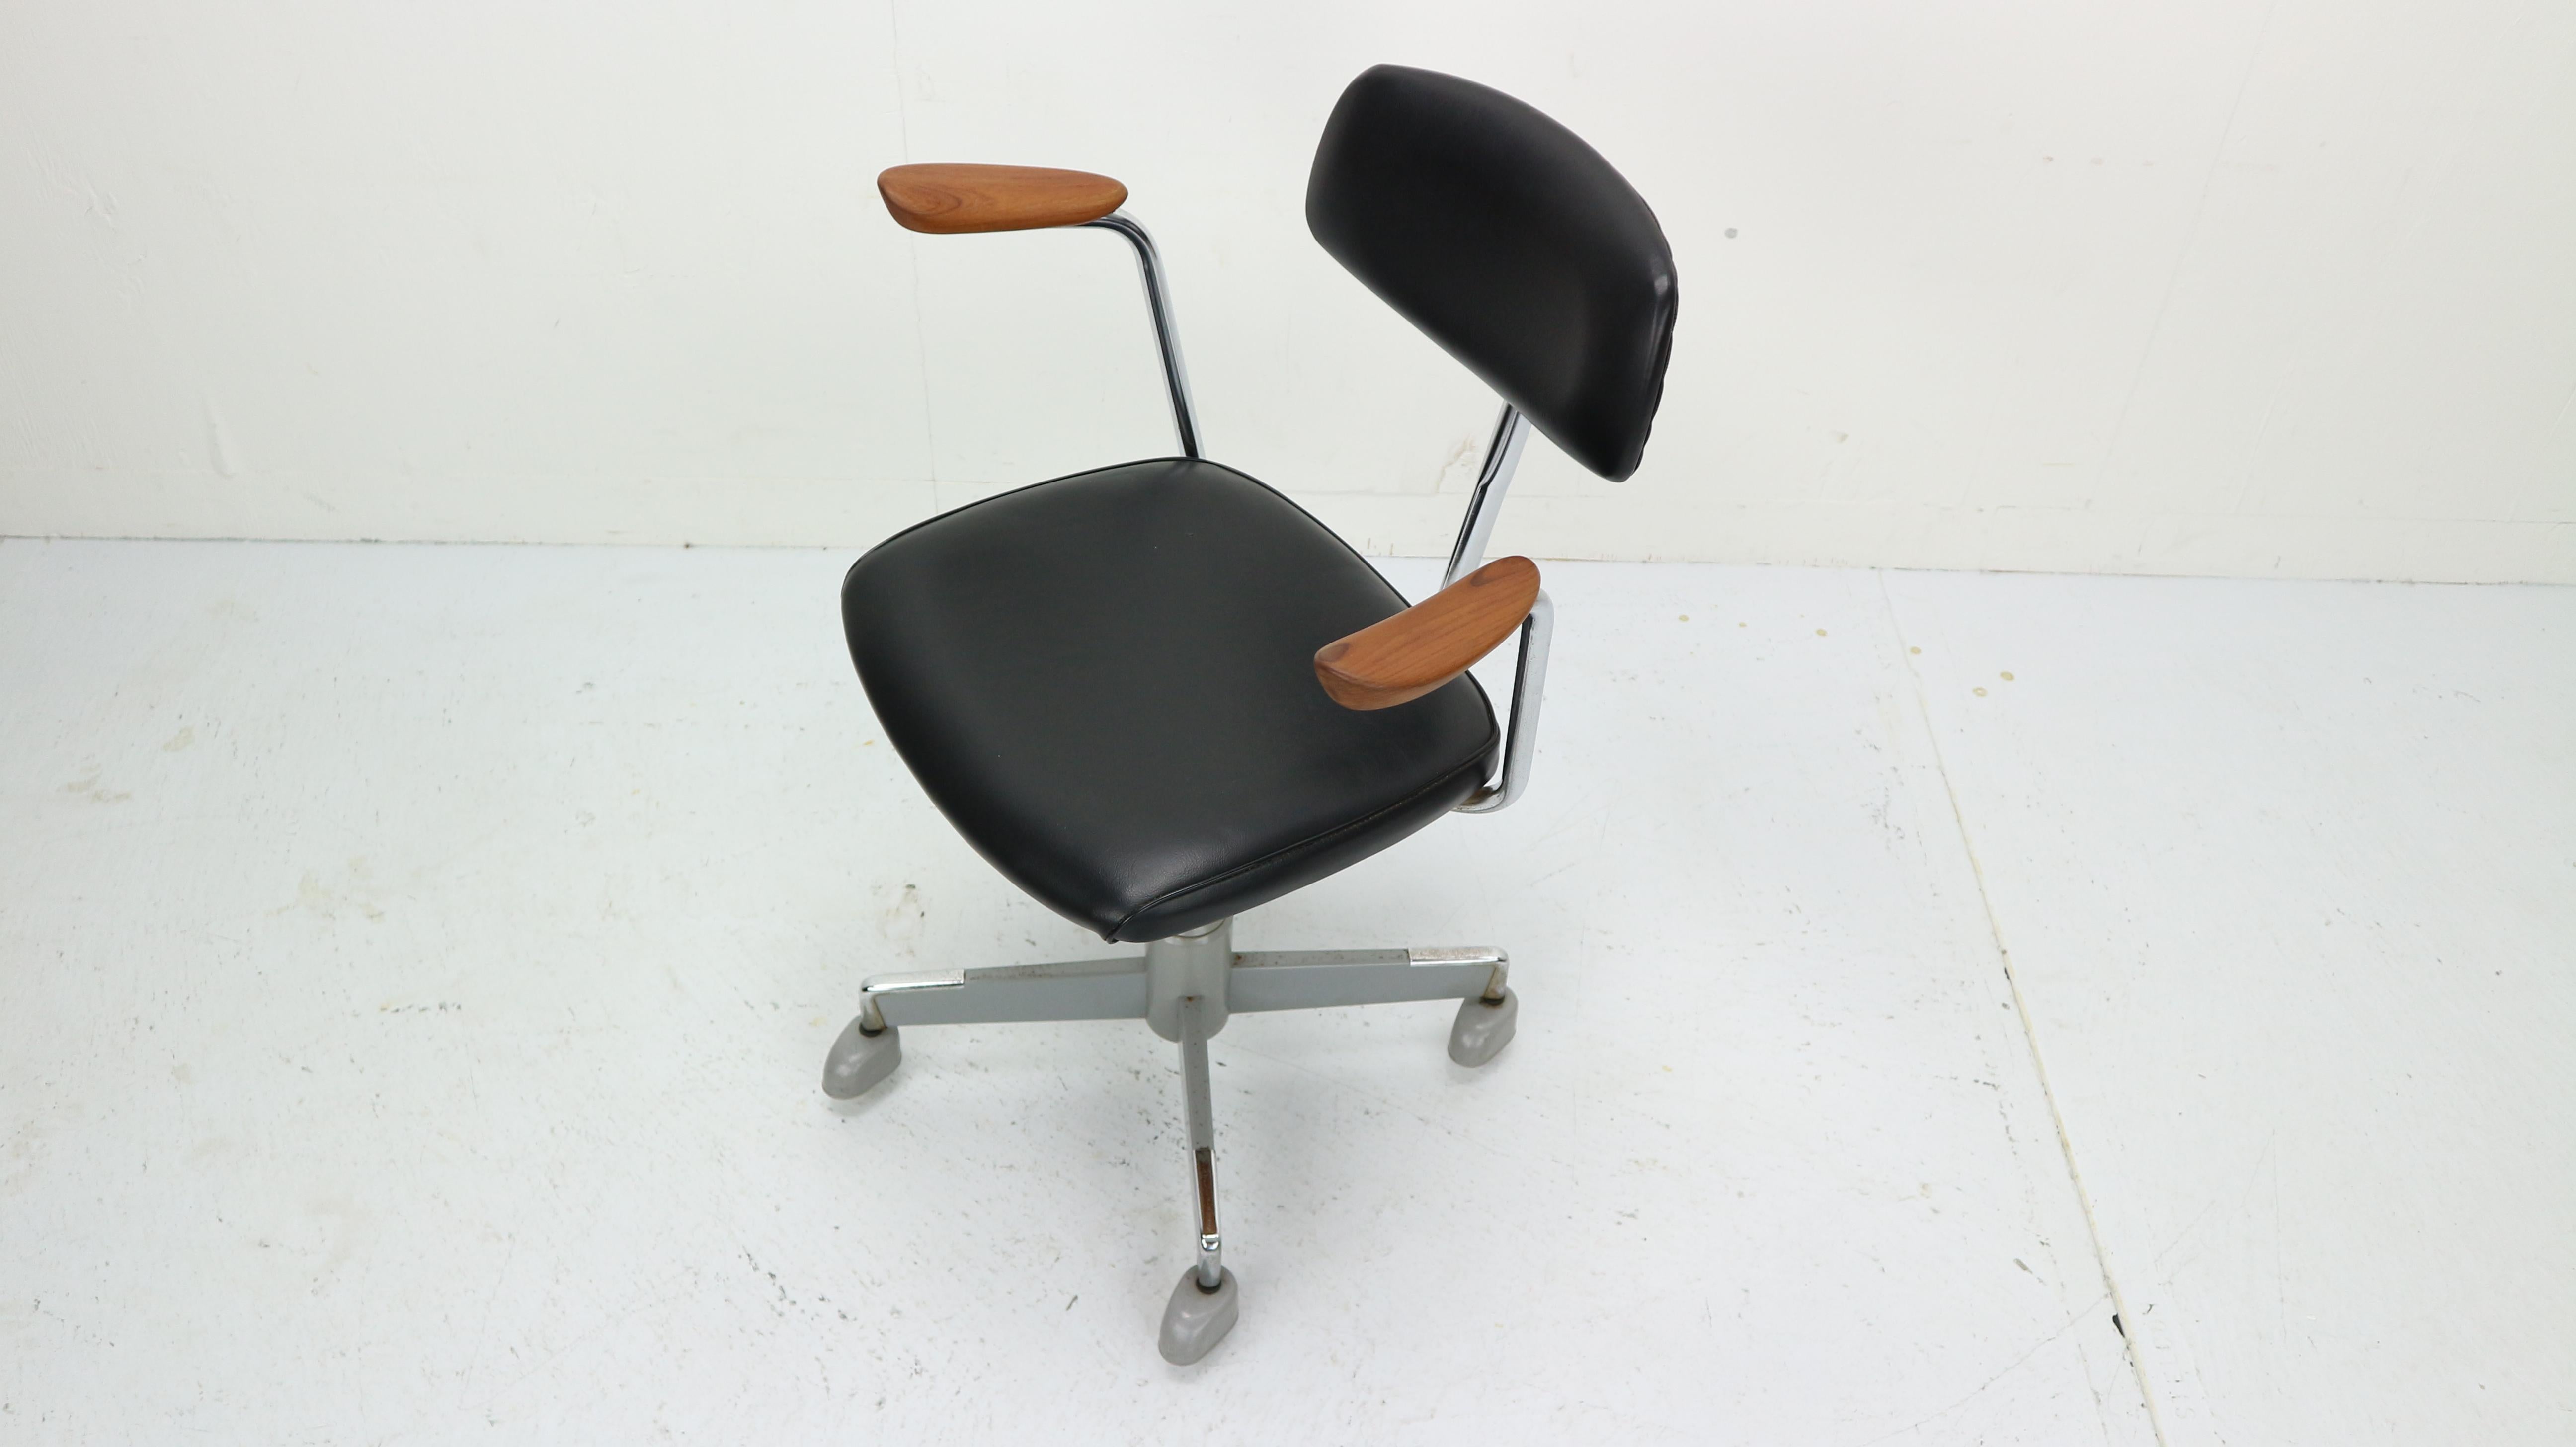 1960s desk chair